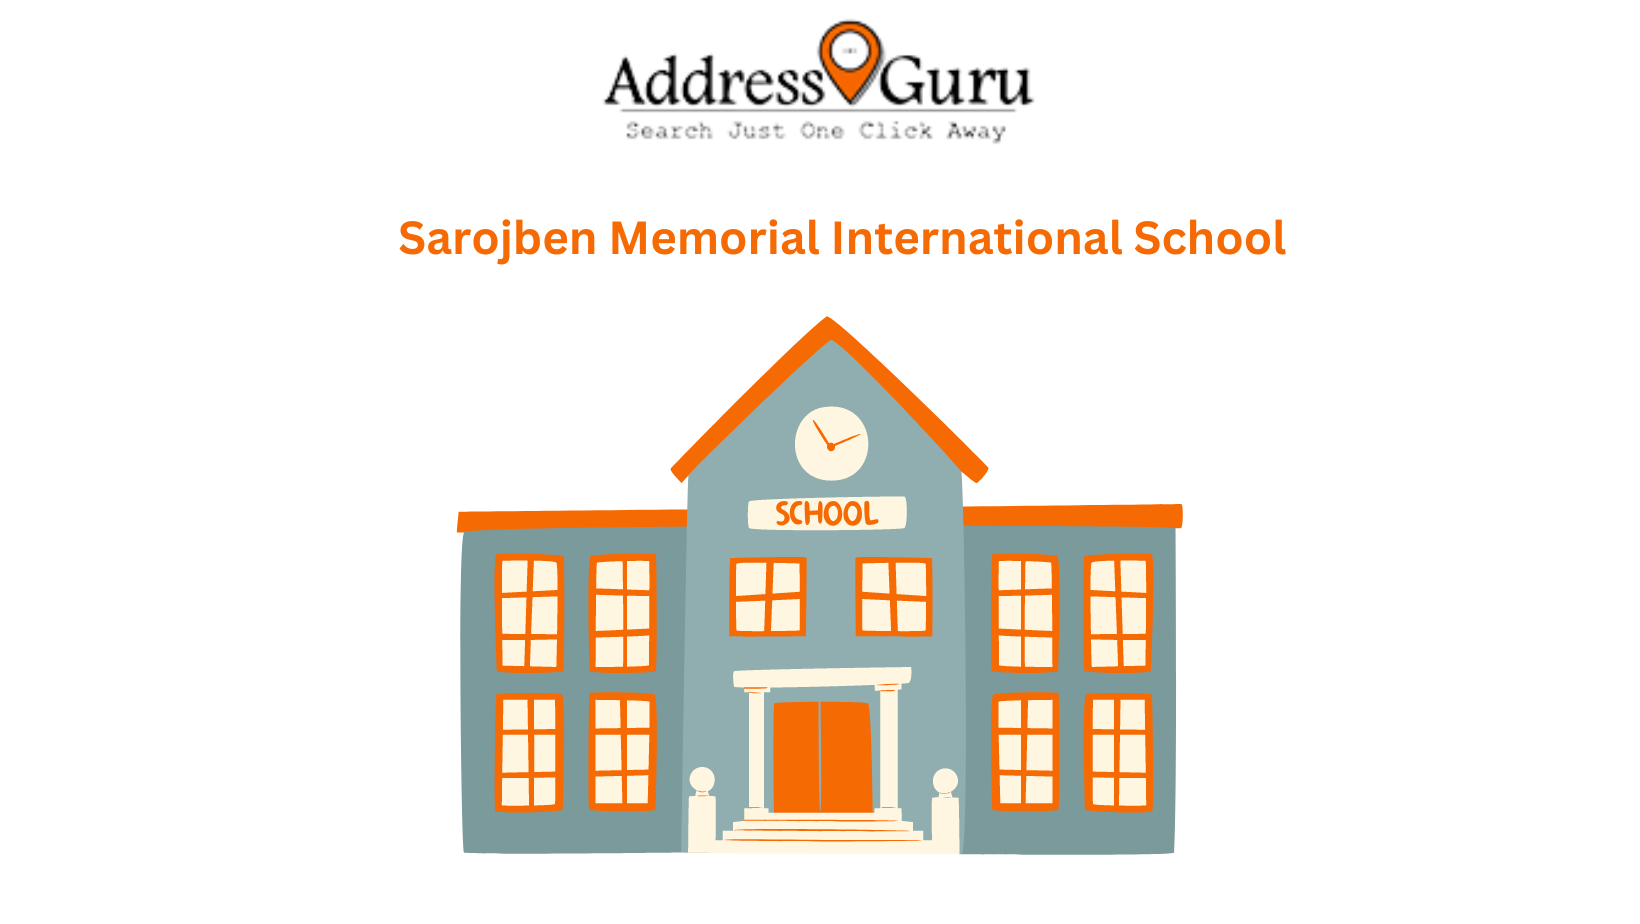 ​SAROJBEN MEMORIAL INTERNATIONAL SCHOOL